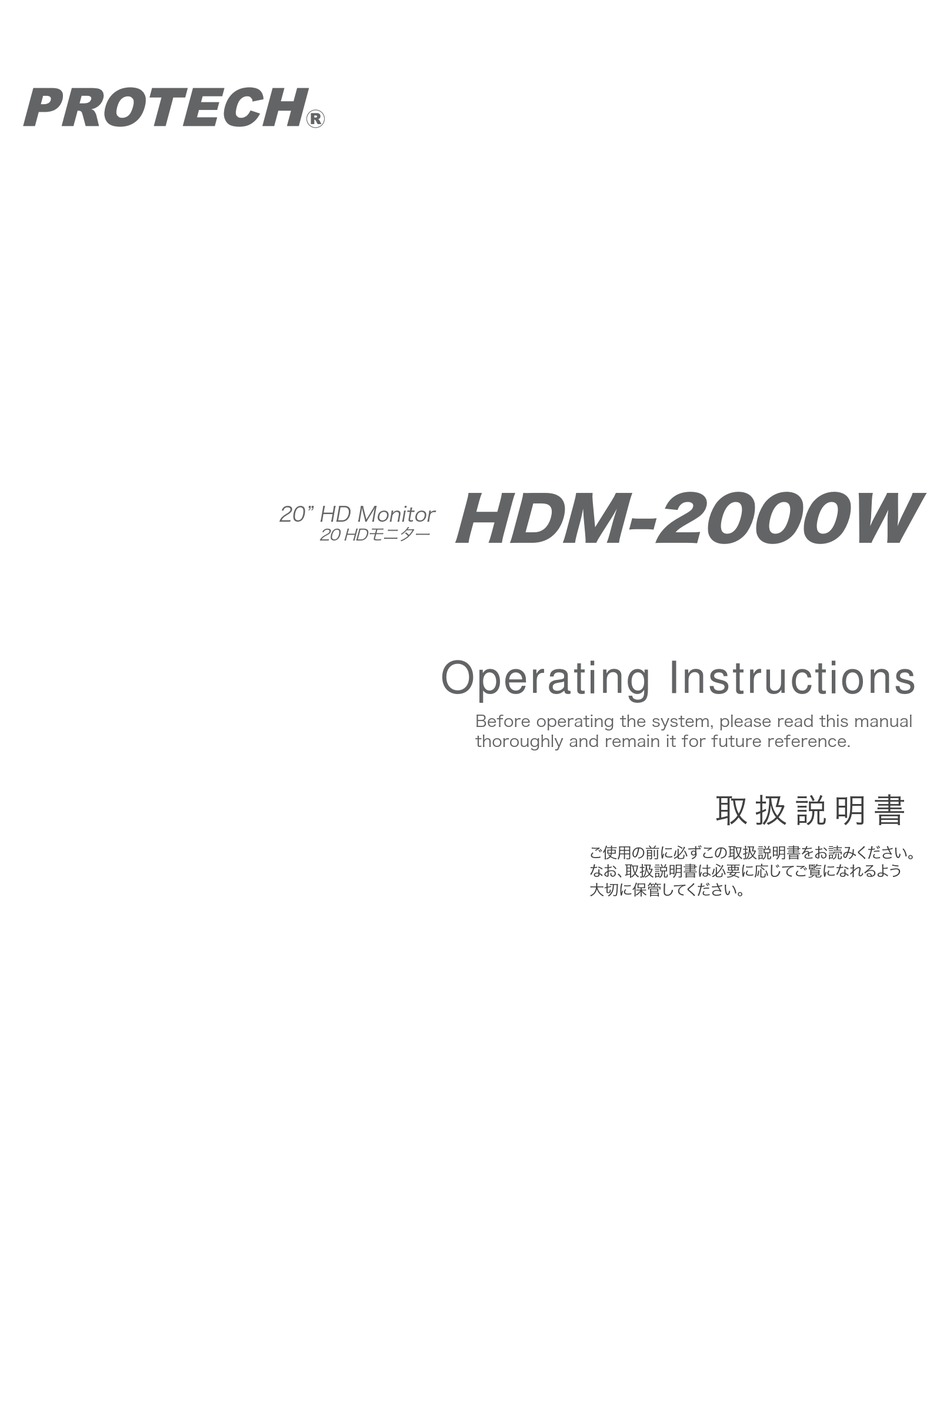 PROTECH HDM-2000W OPERATING INSTRUCTIONS MANUAL Pdf Download | ManualsLib